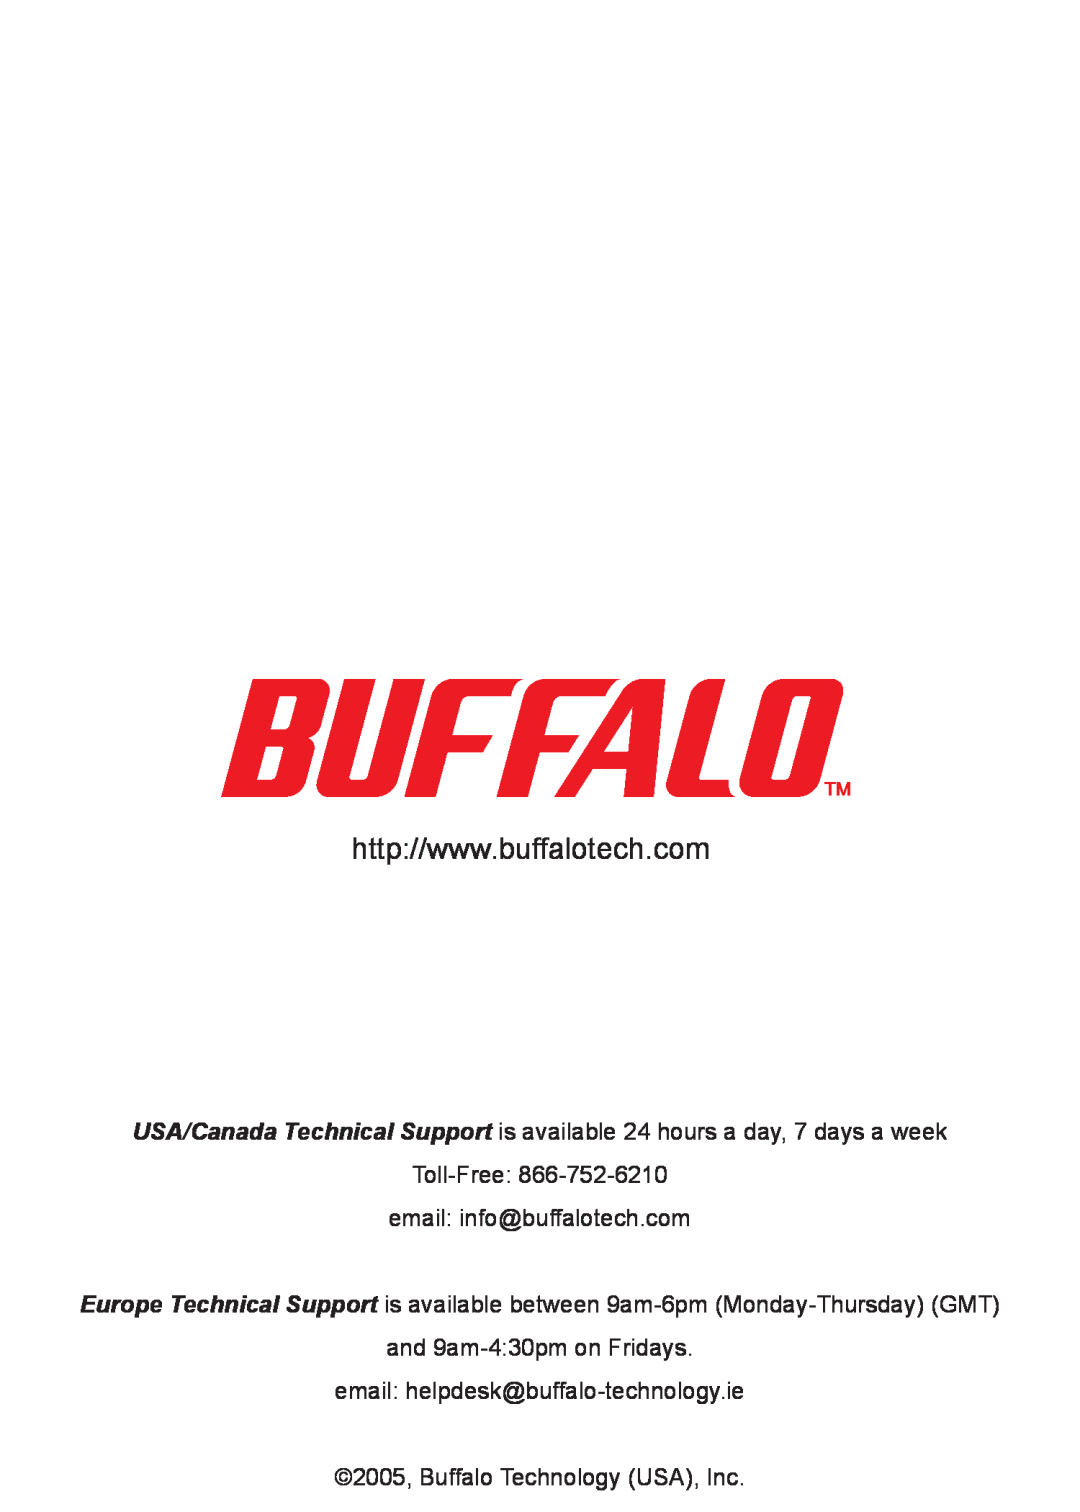 Buffalo Technology none setup guide Toll-Free email info@buffalotech.com, 2005, Buffalo Technology USA, Inc 